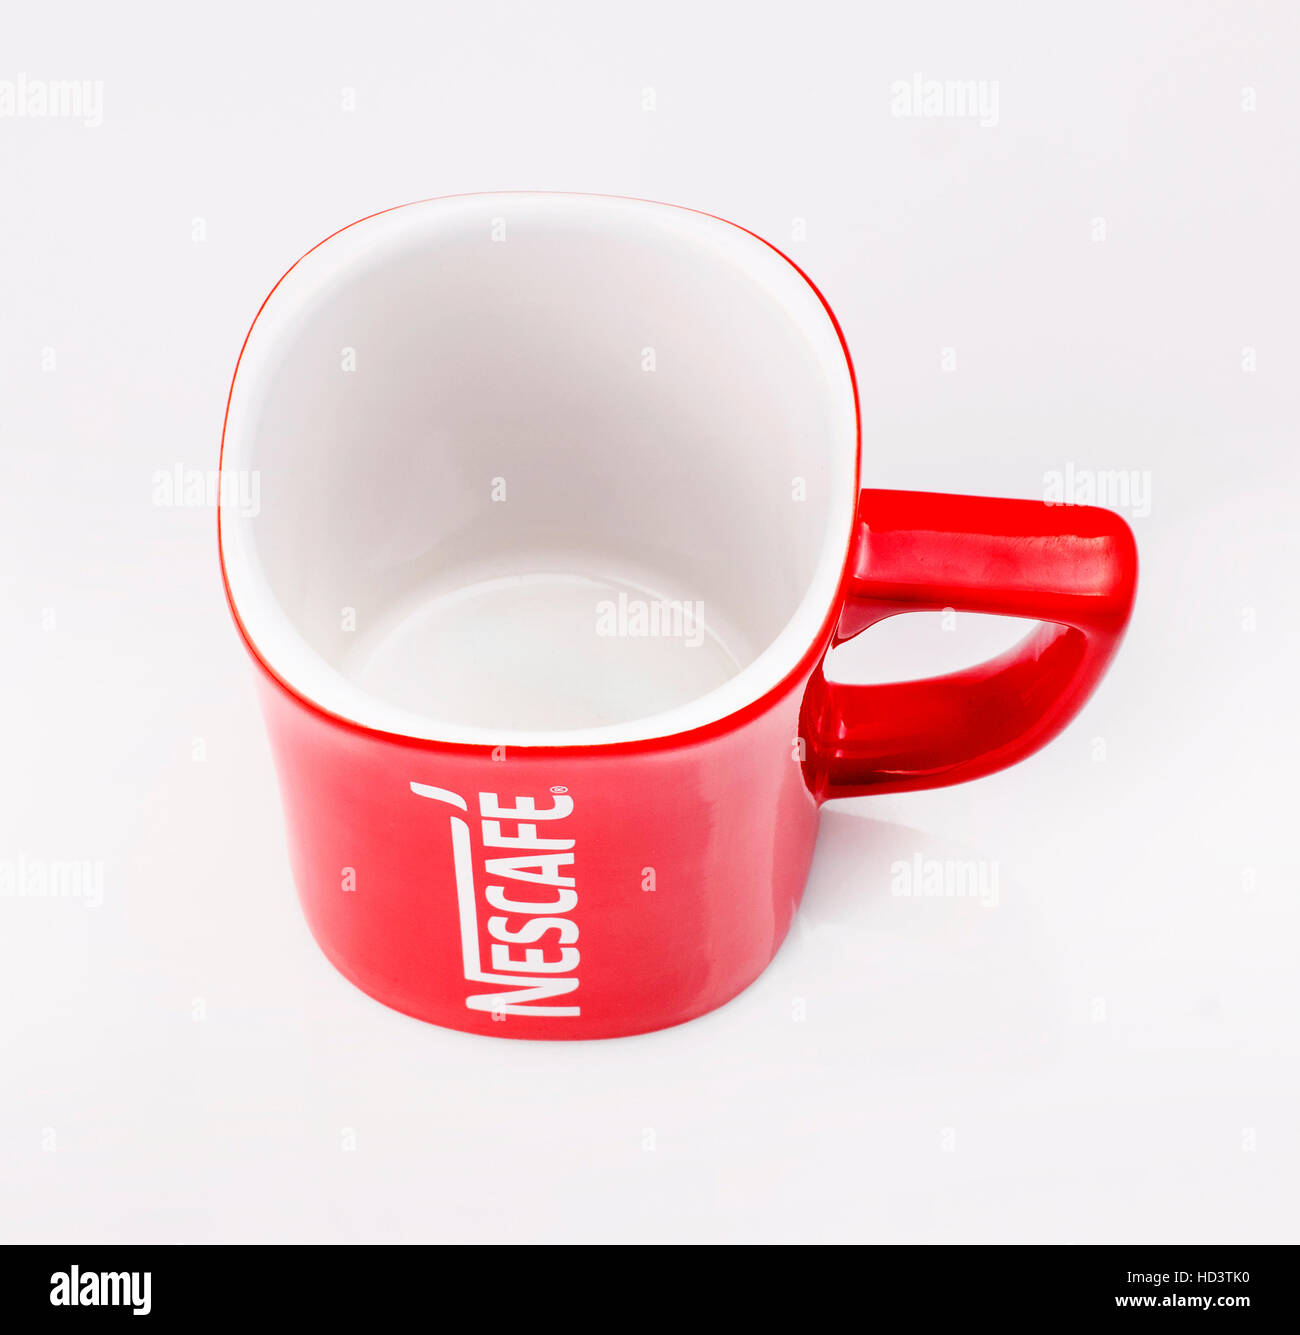 Nescafe mug, red mug Stock Photo - Alamy